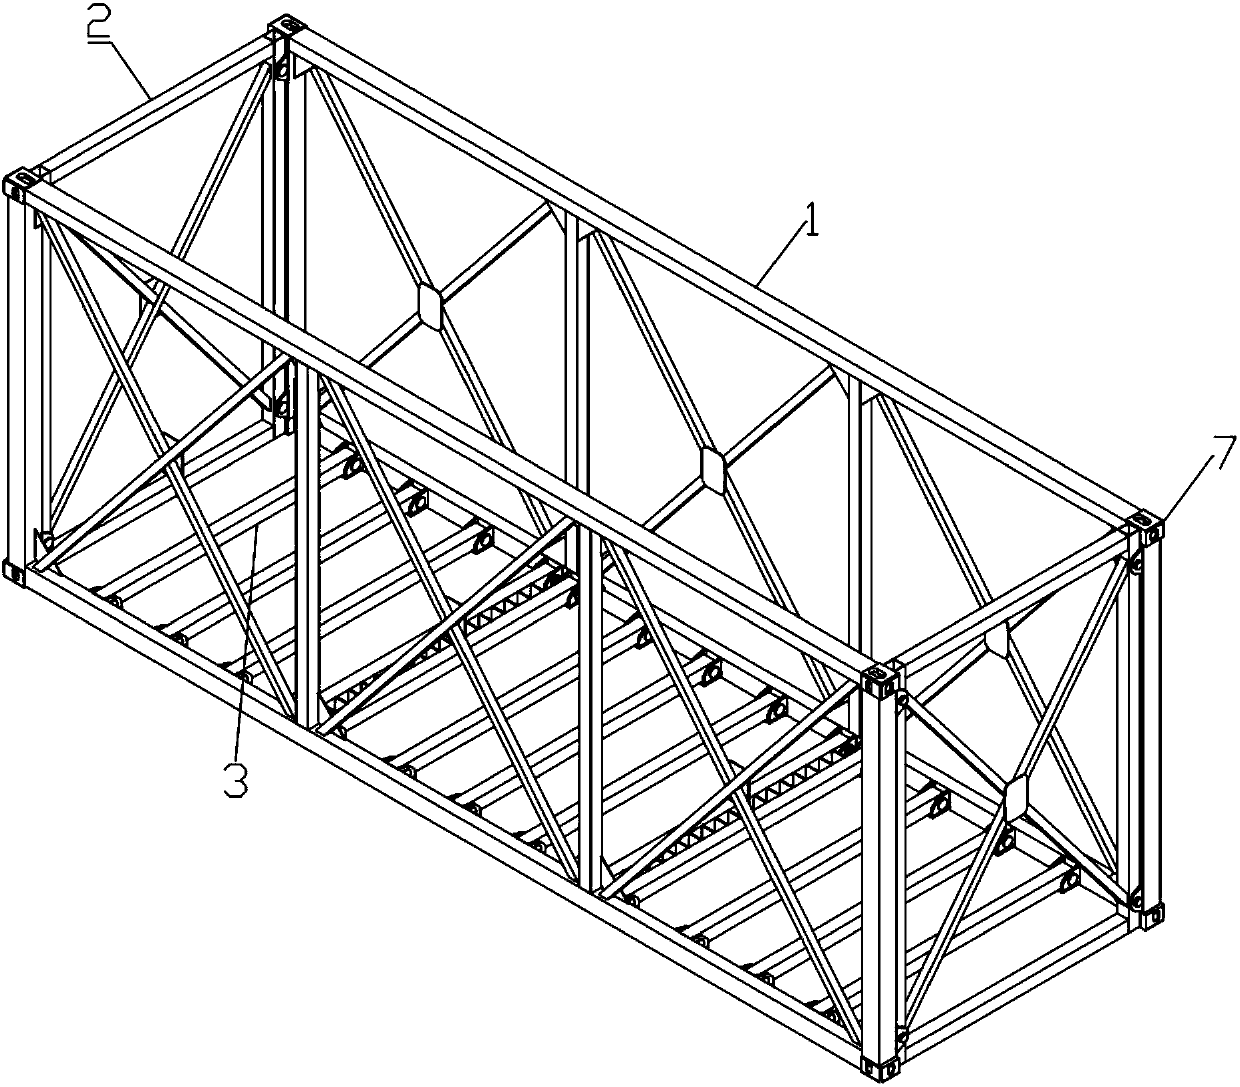 Transport frame for prefabricated members